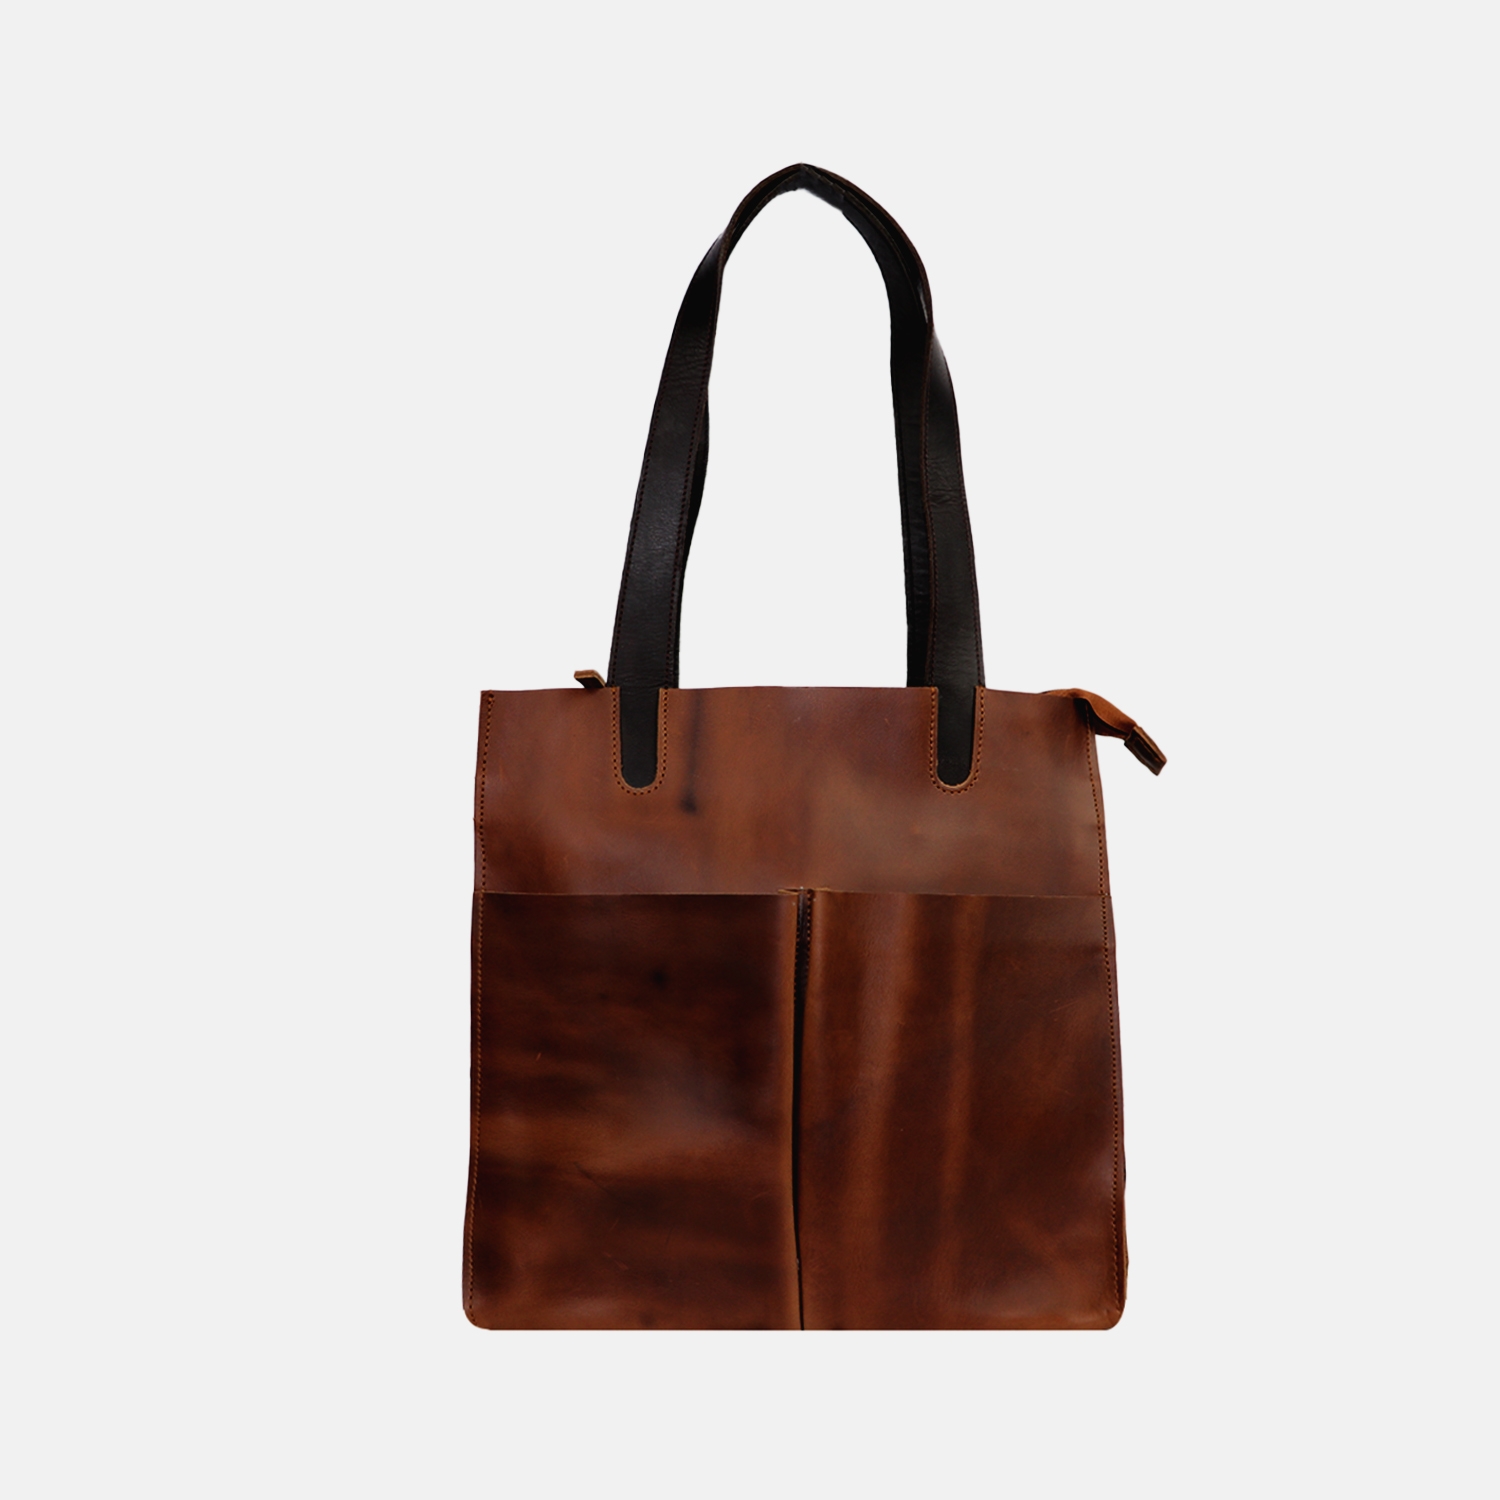 EMM | Tote Bag with Leather Shoulder Straps - Brown